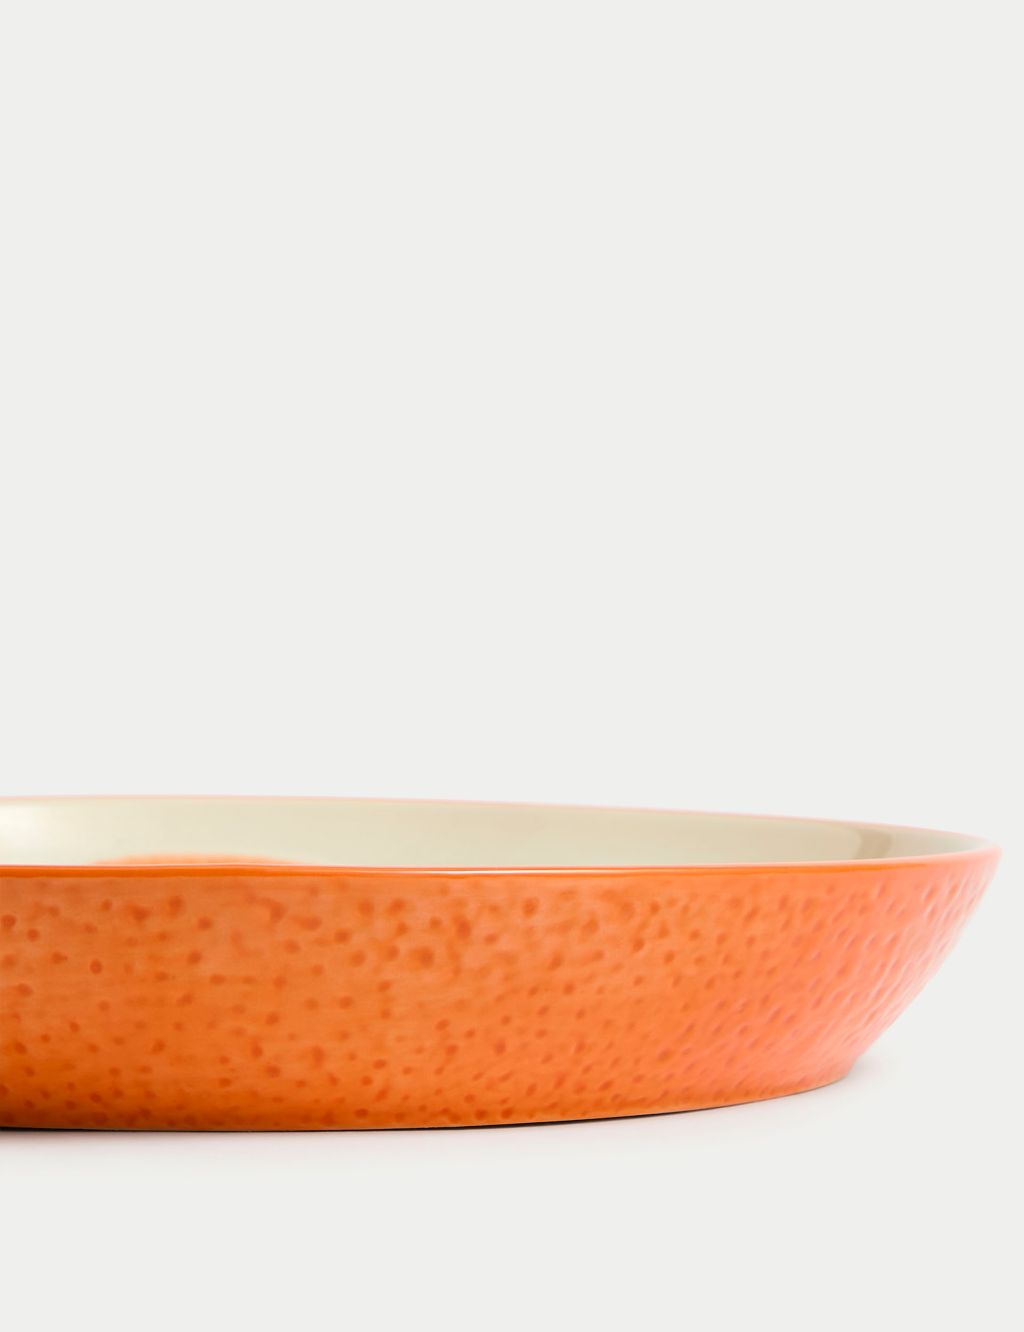 Orange Stoneware Serving Platter 2 of 5